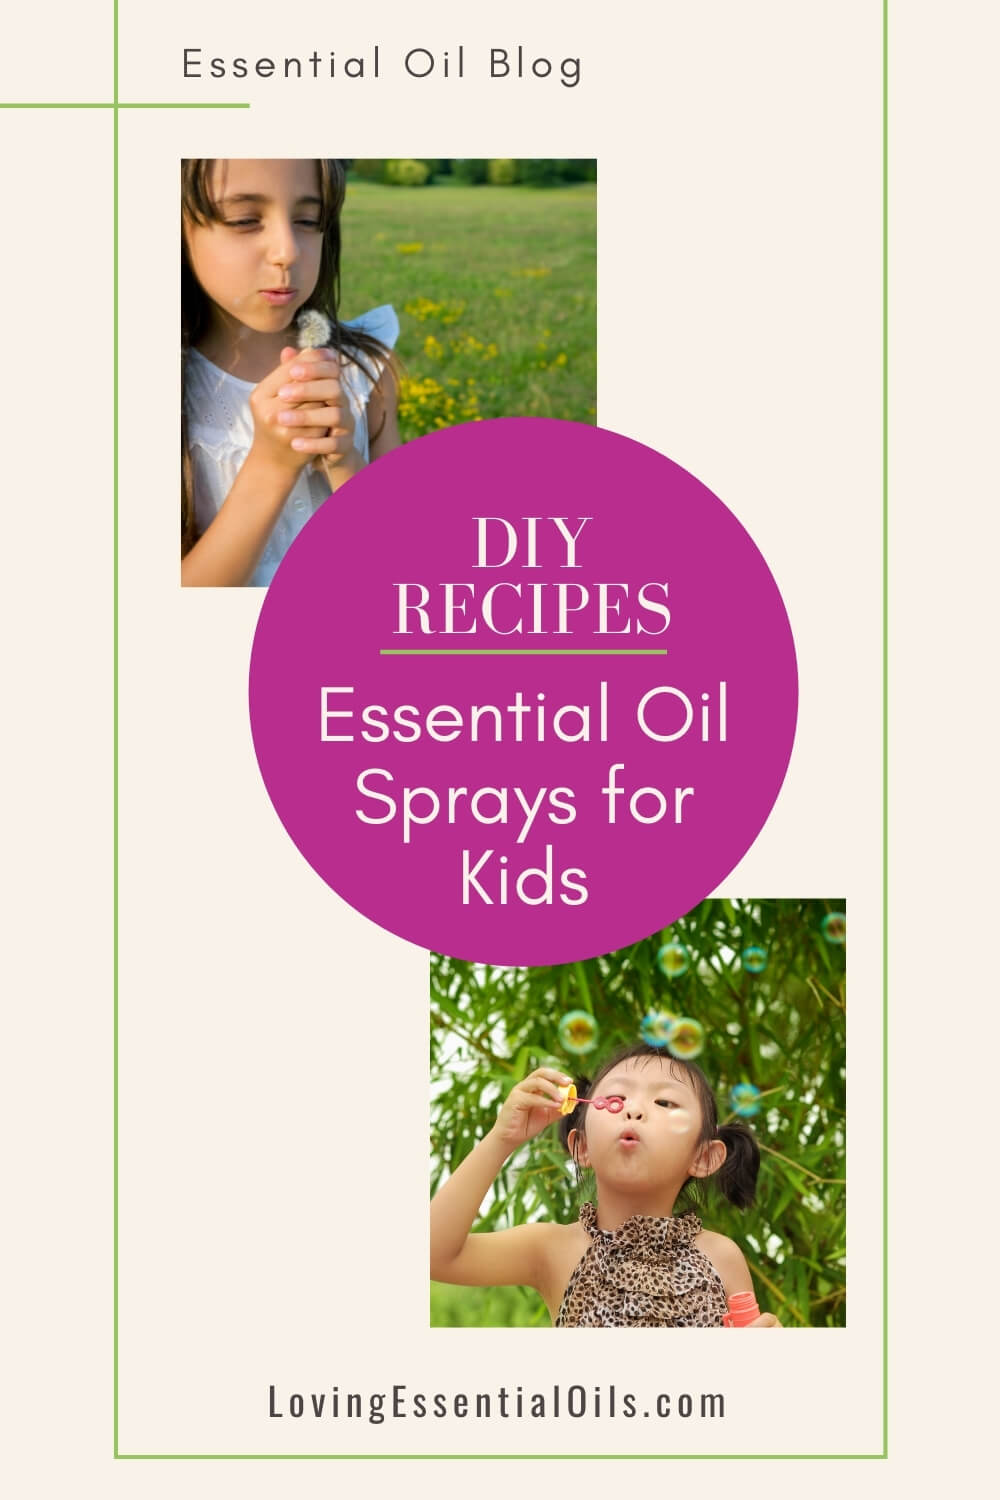 Essential Oil Spray Recipes for Kids by Loving Essential Oils